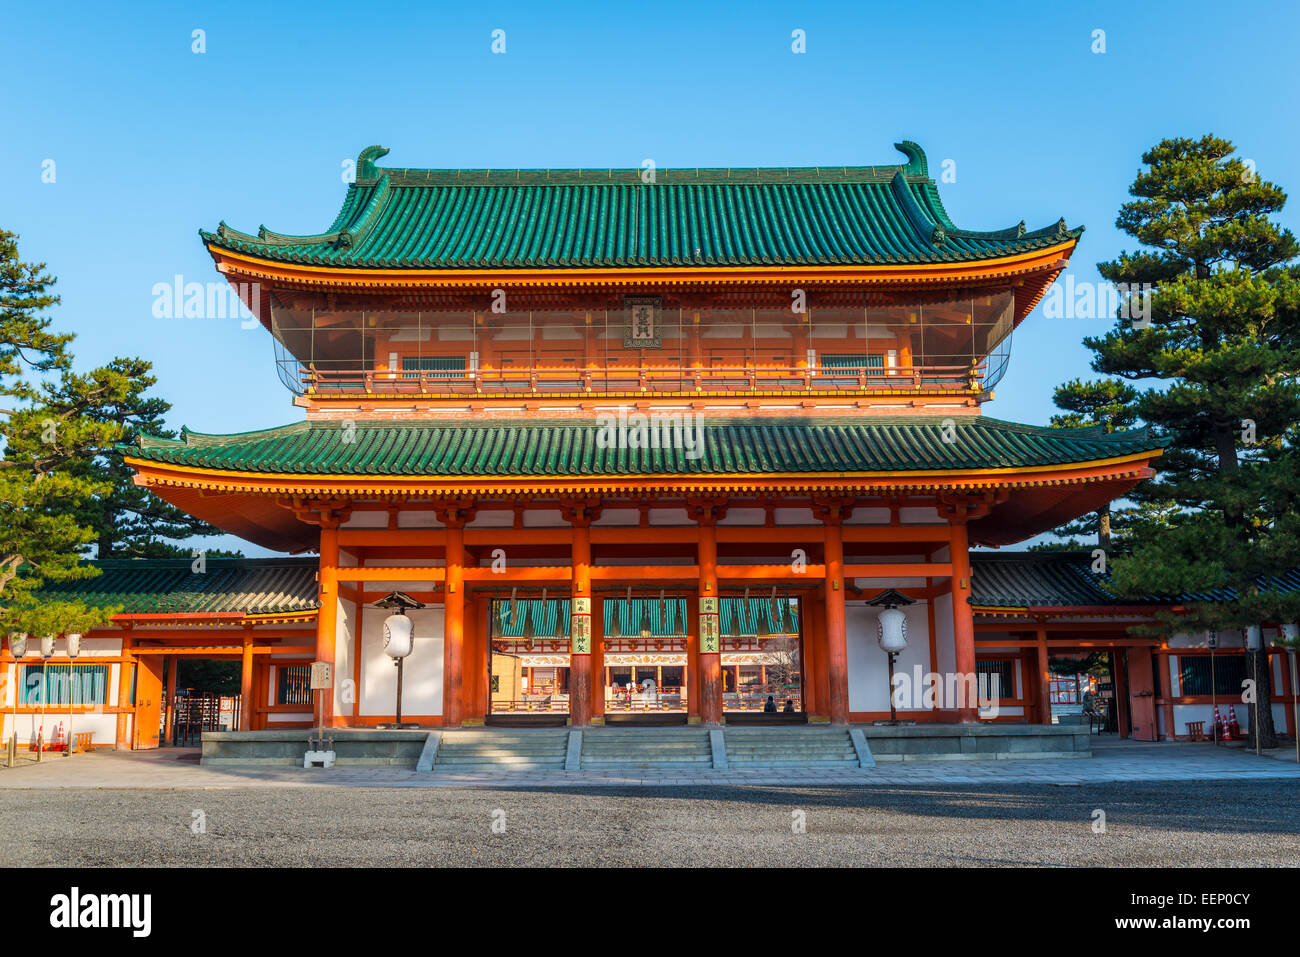 The main gate of Heian Shrine in Kyoto, Japan. Stock Photo